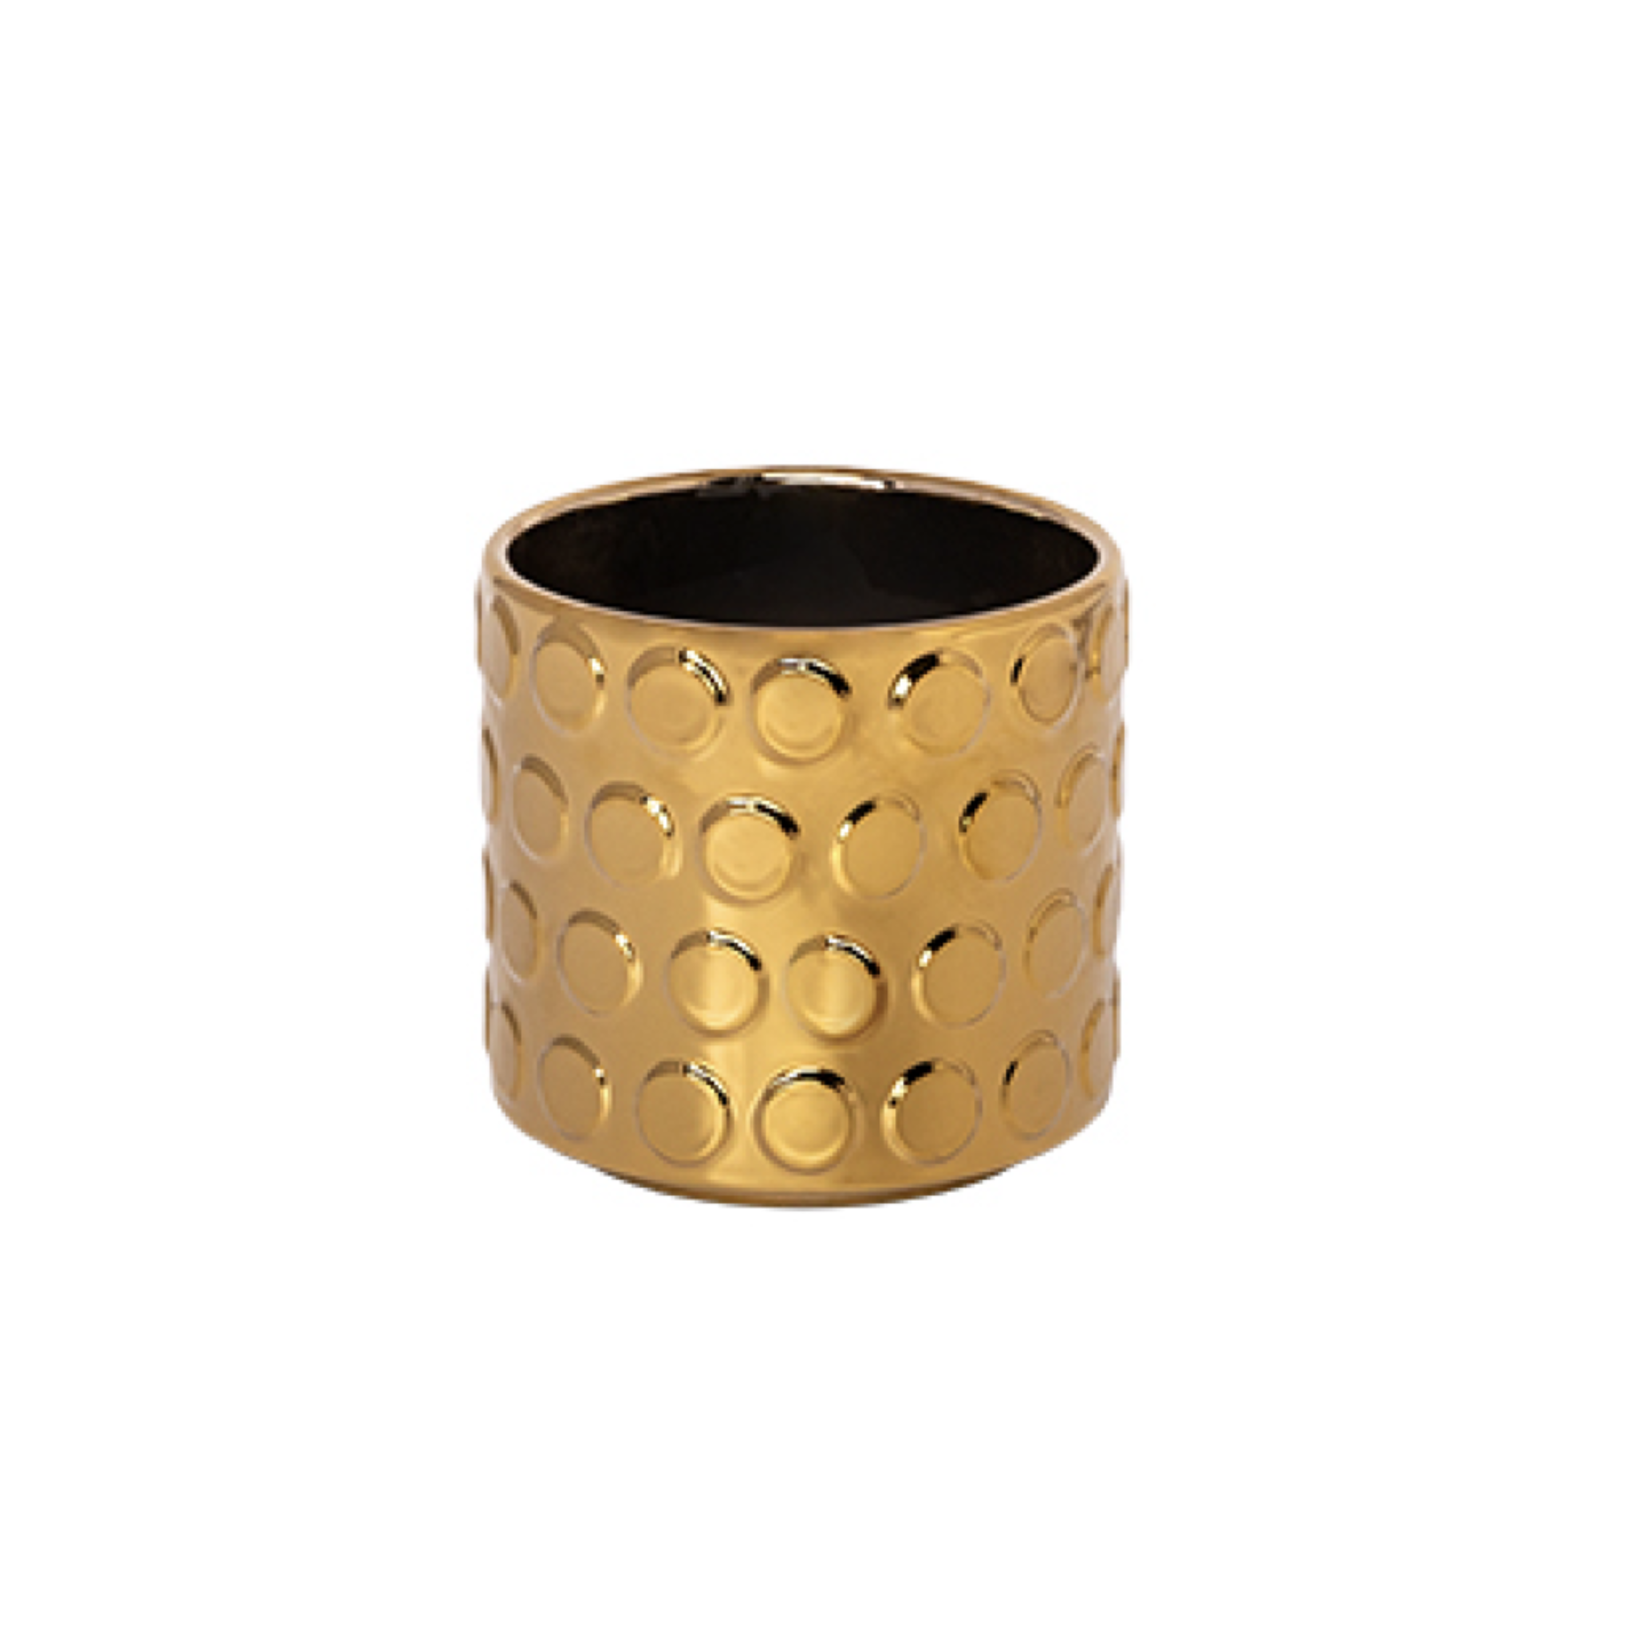 6.5”H X 6” GOLD Ceramic Round Planter with Bubble Line Pattern Design